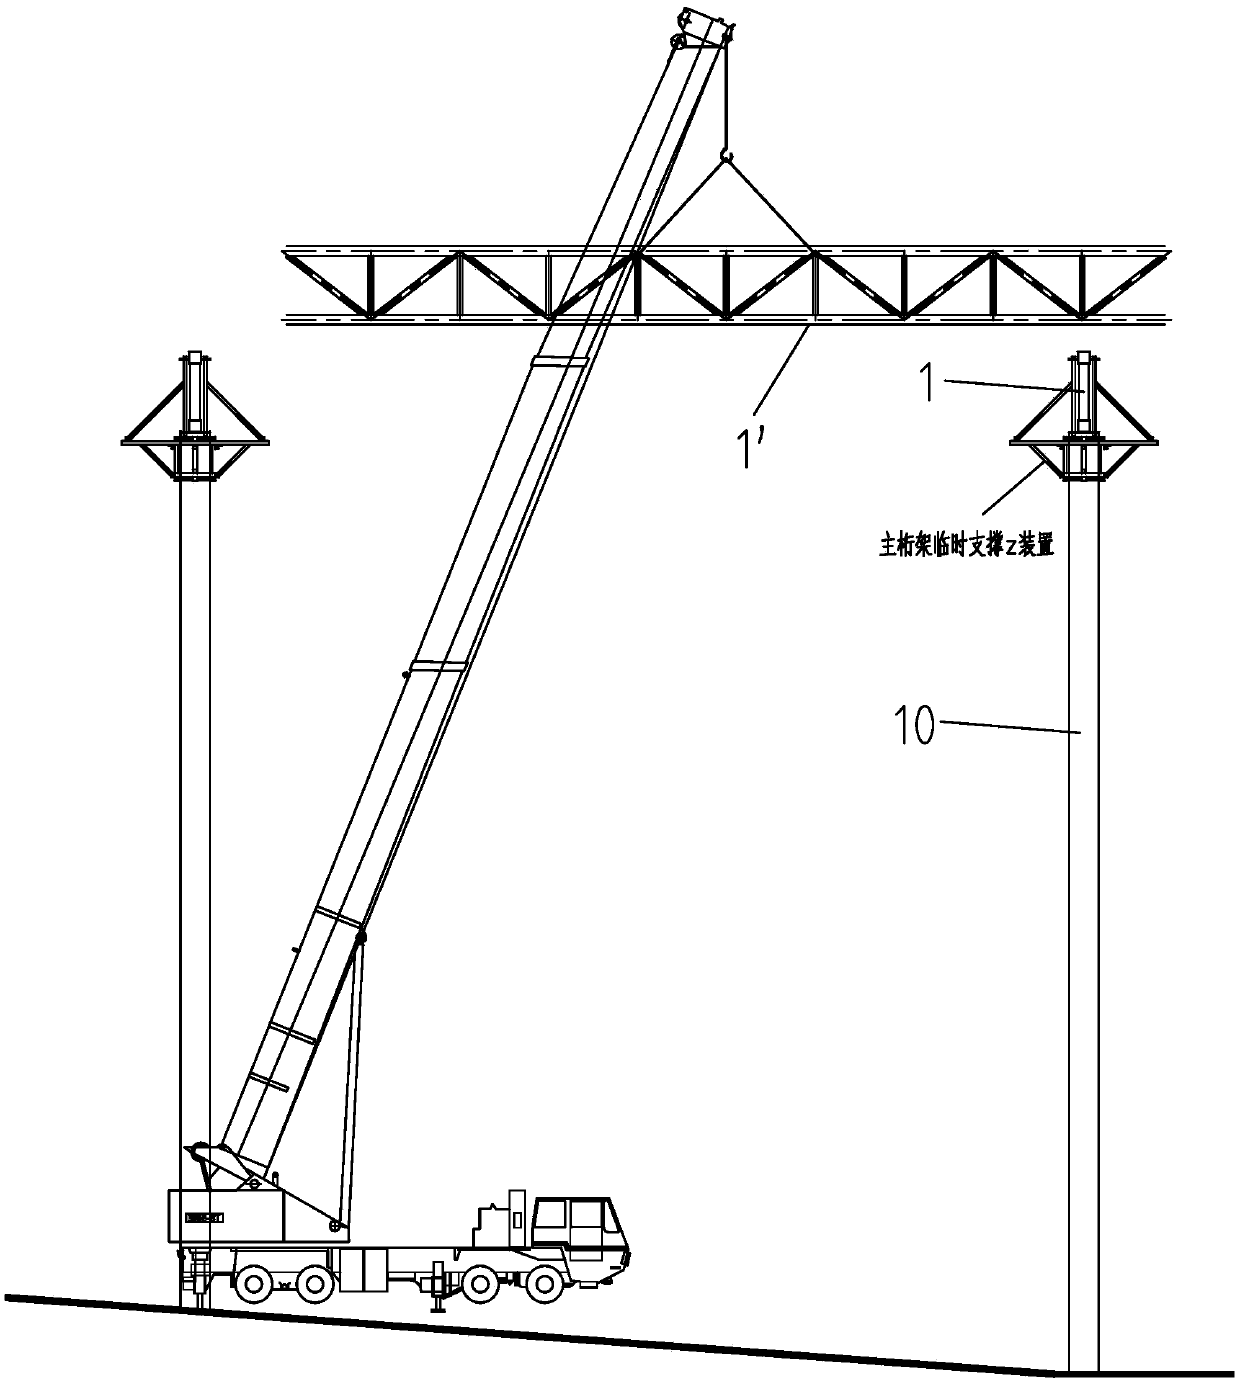 An installation method of sheet truss composite structure